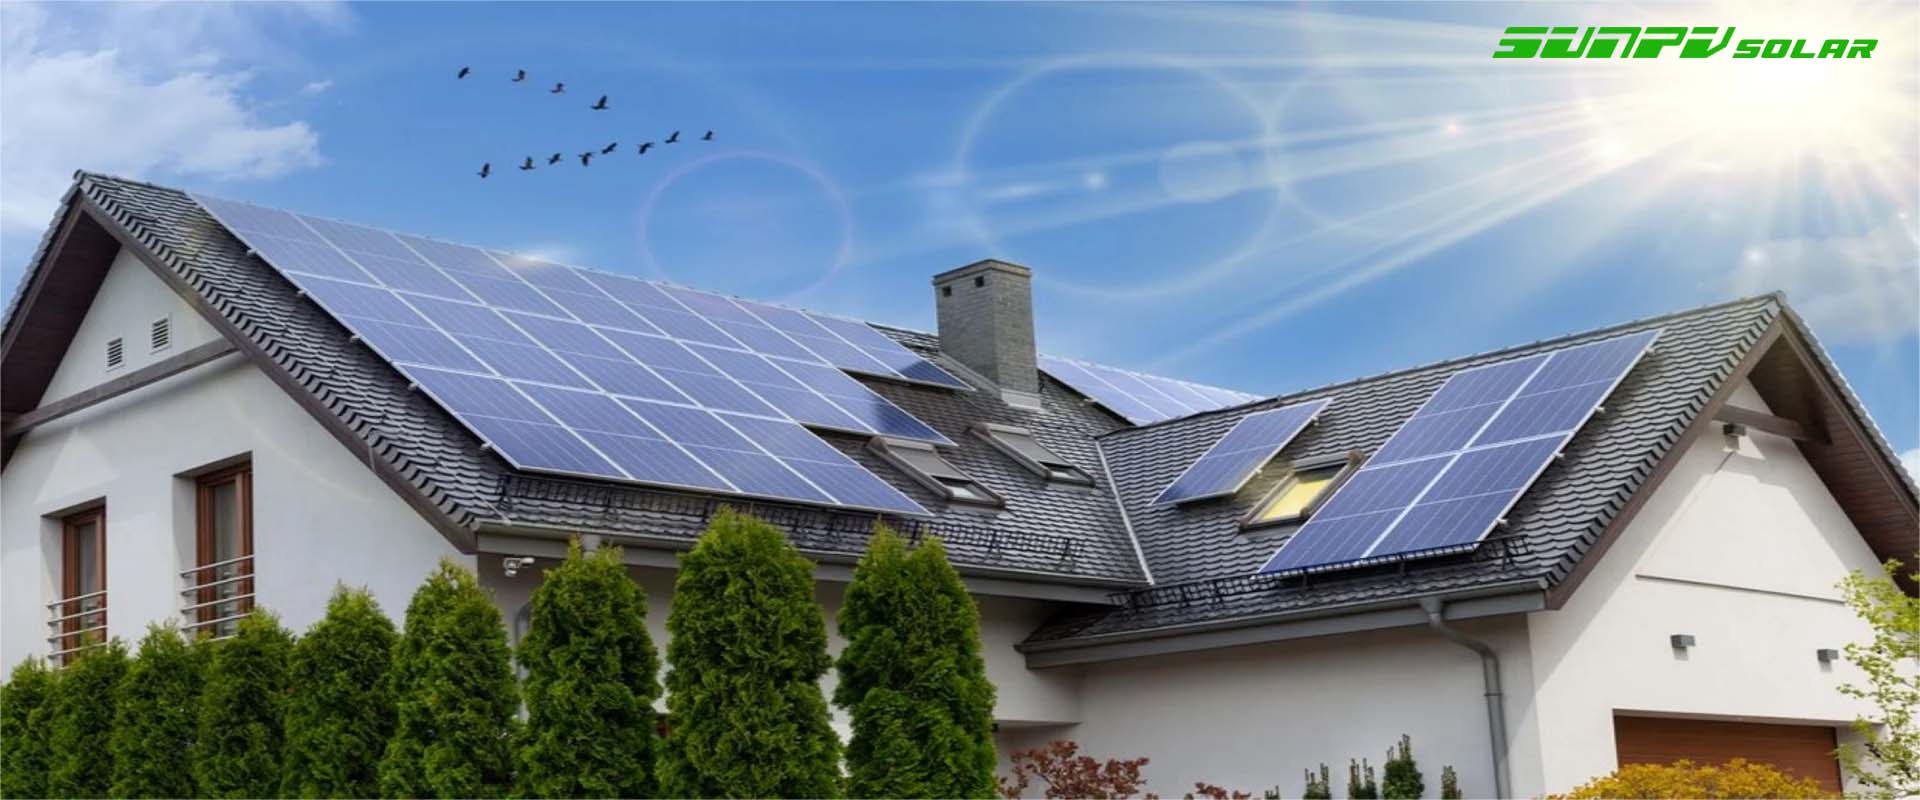 Solar panel system photovoltaic